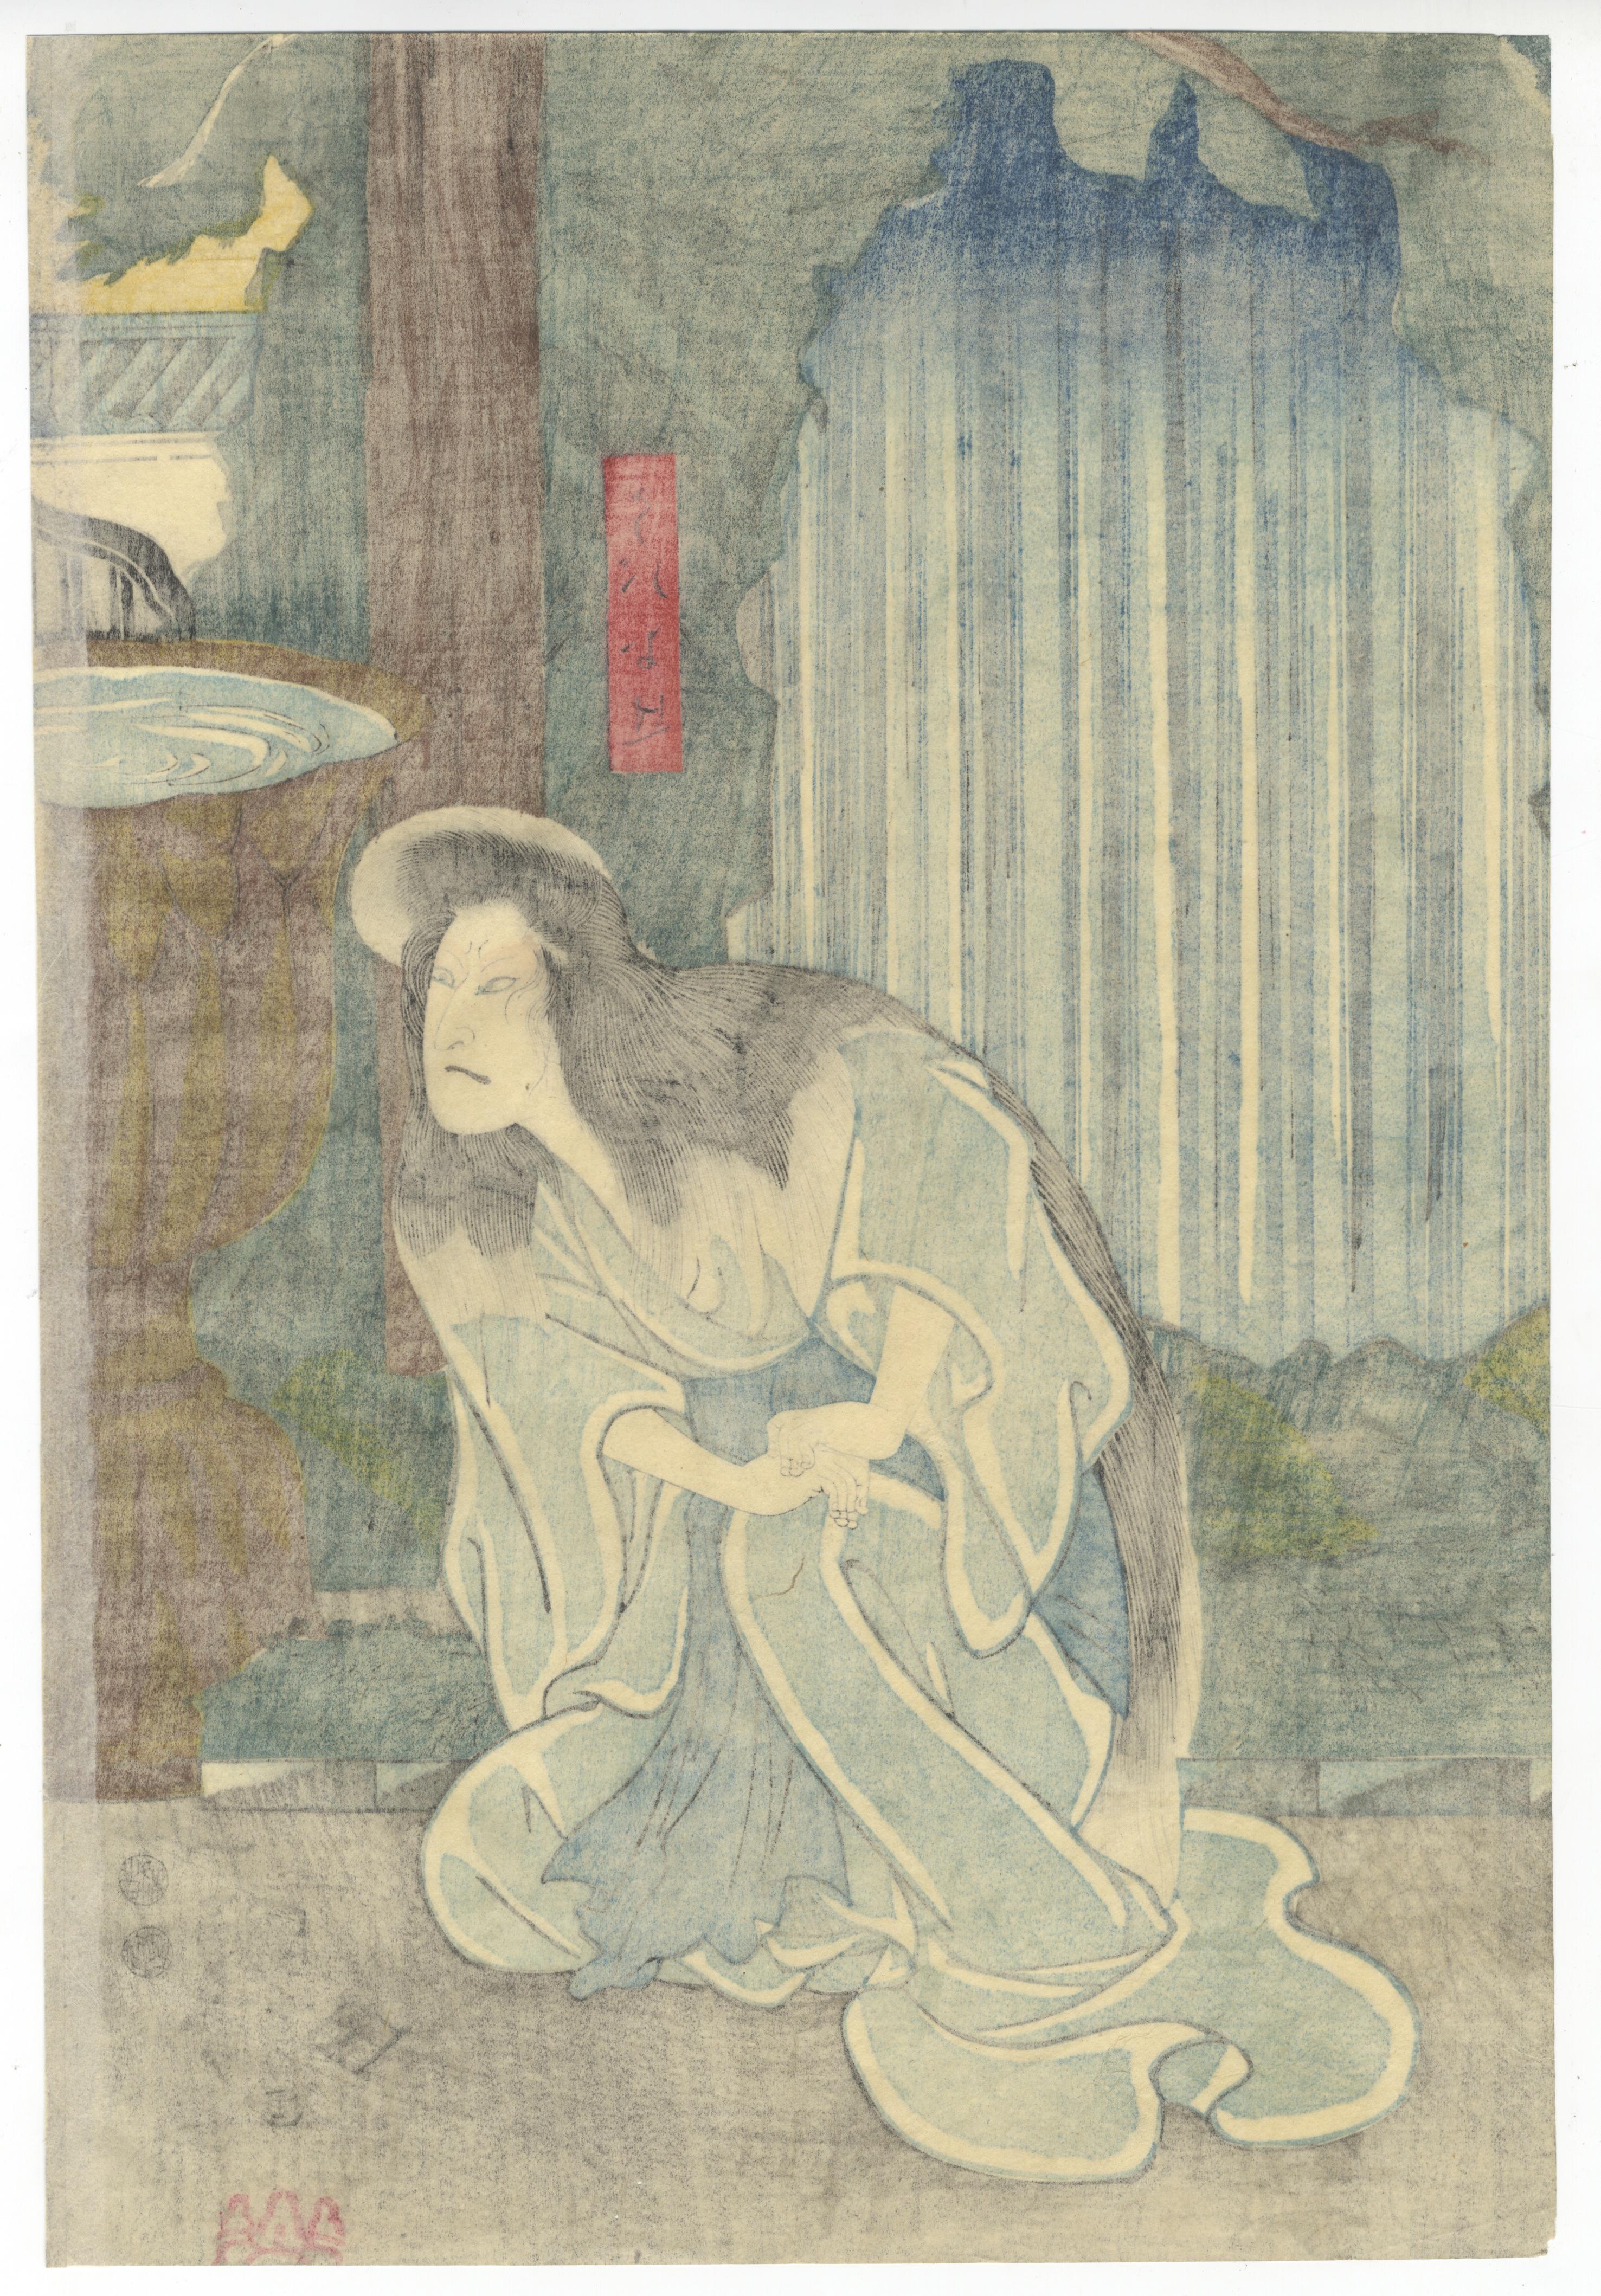 Artist: Kuniyoshi Utagawa (1798-1861)
Title: Story of Tamiya Botaro
Publisher: Ningyoya Takichi
Date: c. 1847-1852
Size: (L) 34.8 x 23.8, (C) 34.8 x 25.3, (R) 34.8 x 24.3 cm
Condition report: Trimmed, some pinholes, vertical fold mark on the centre